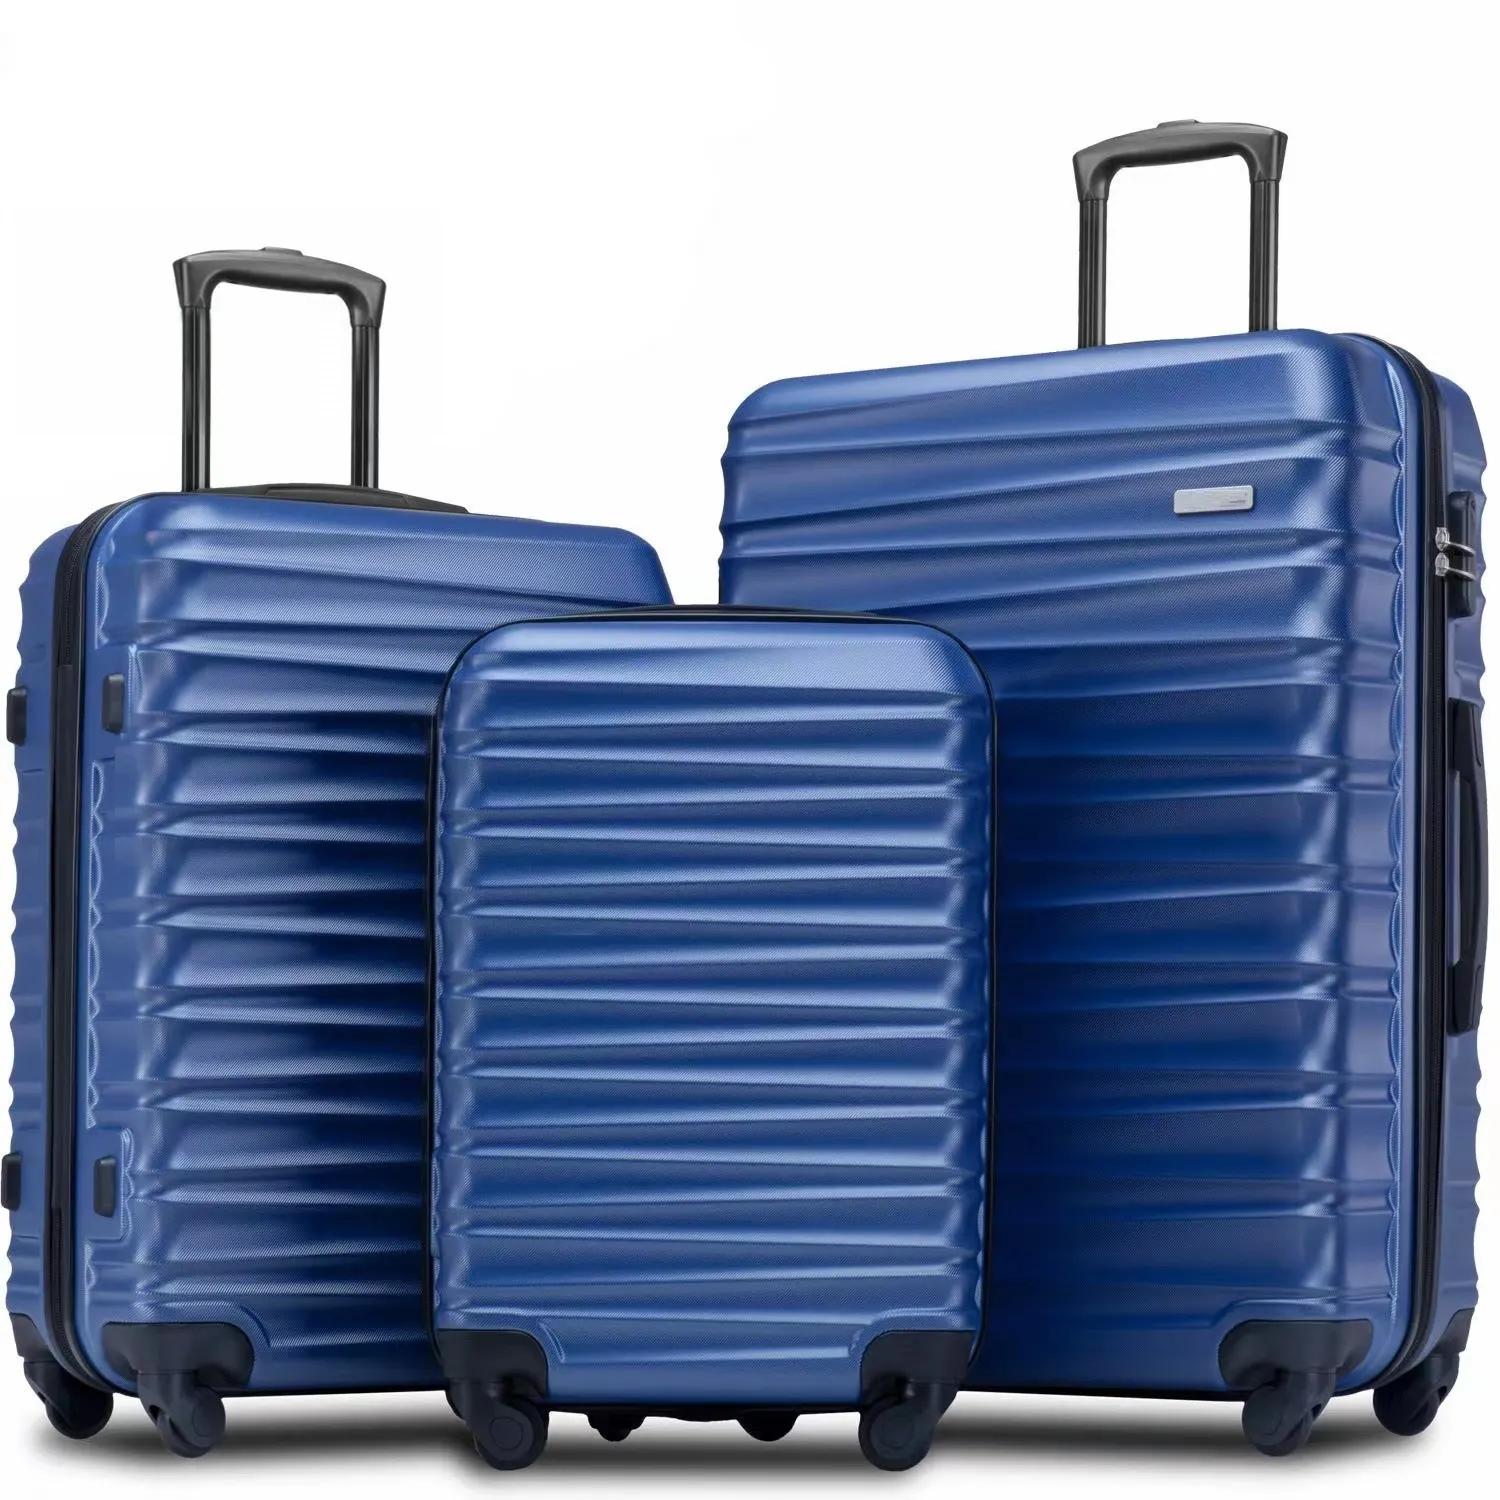 Customizable Portable Luggage 3 pcs Set Light Weight Travel Bag Suitcase Luggage Set Hard Shell ABS Trolley Luggage